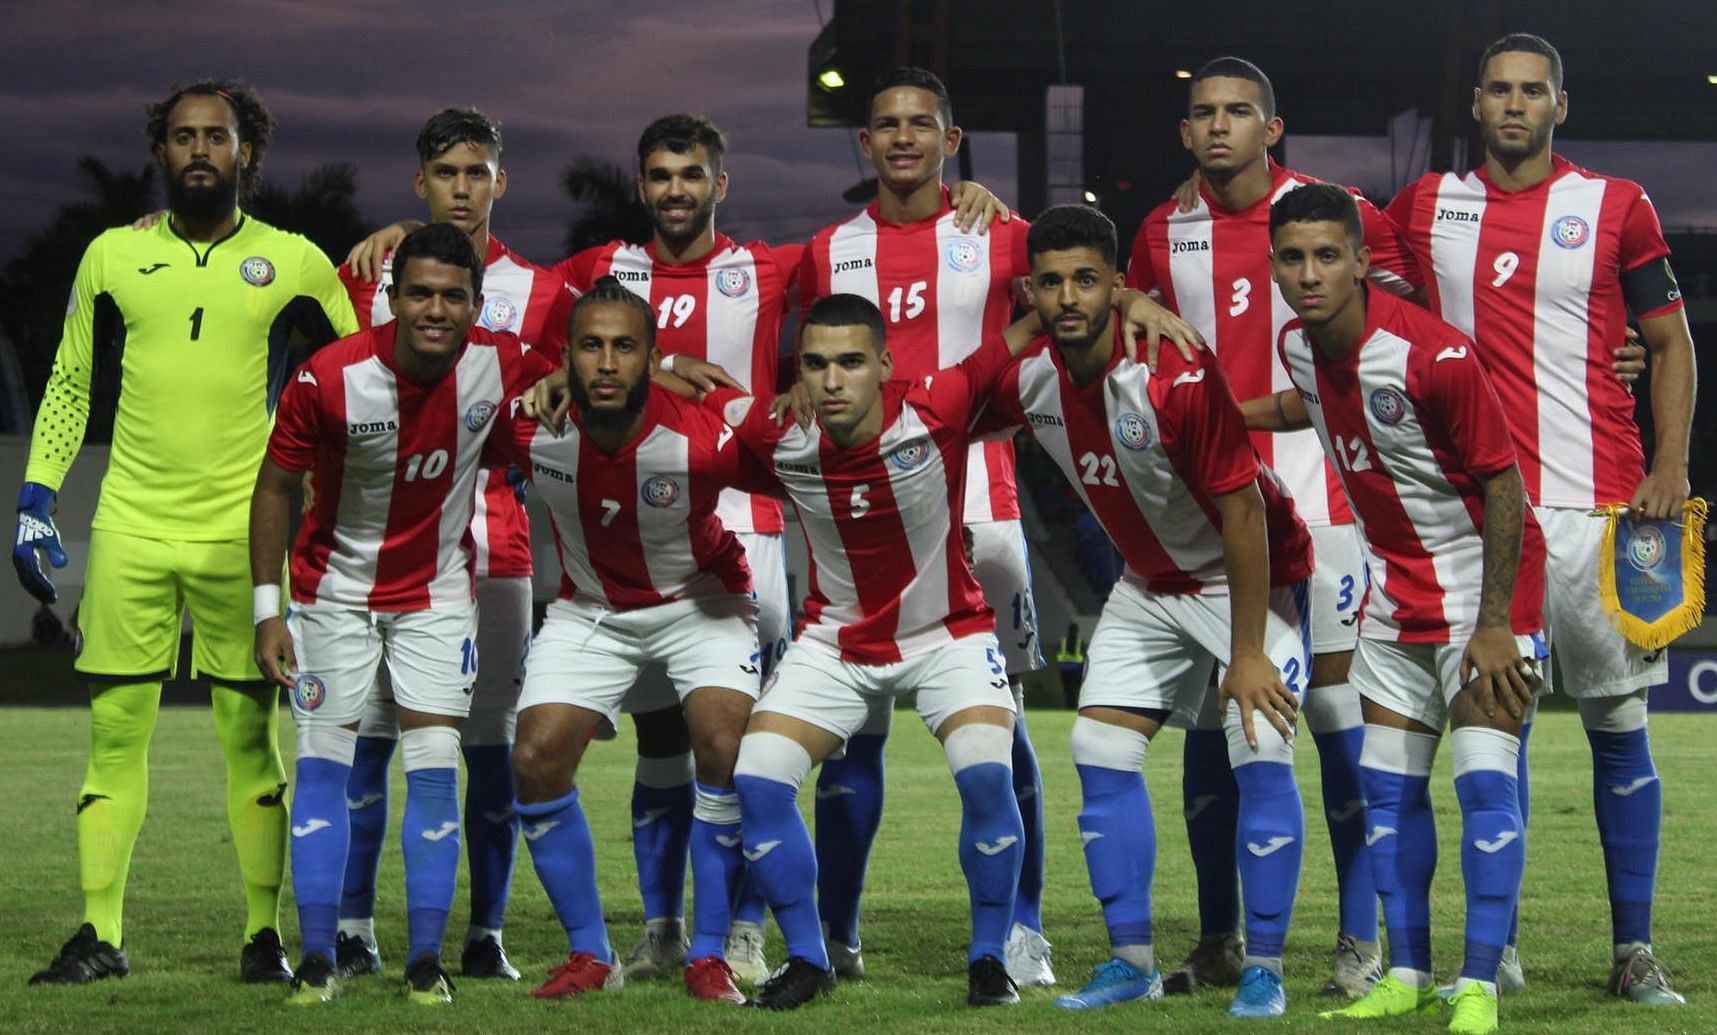 Puerto Rici national team, courtesy of Football Arroyo